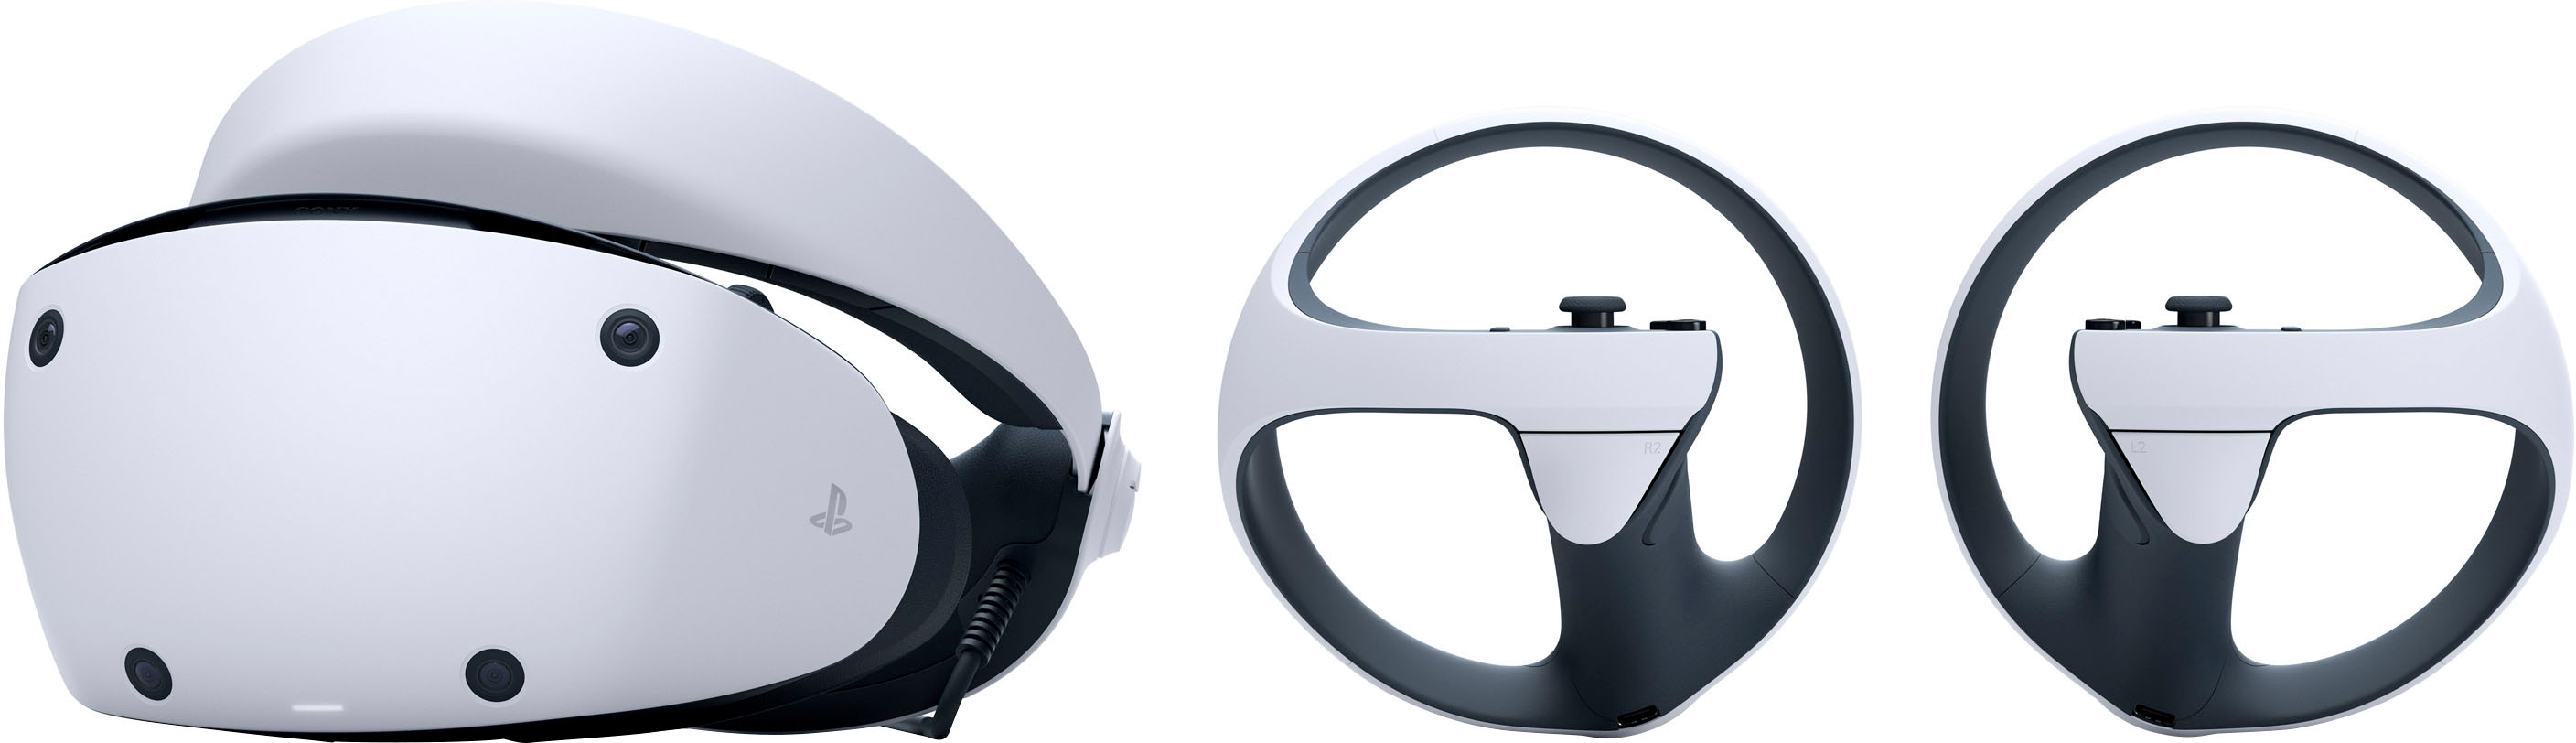 Sony PlayStation VR VR Worlds Bundle (PS4) 3002147 B&H Photo